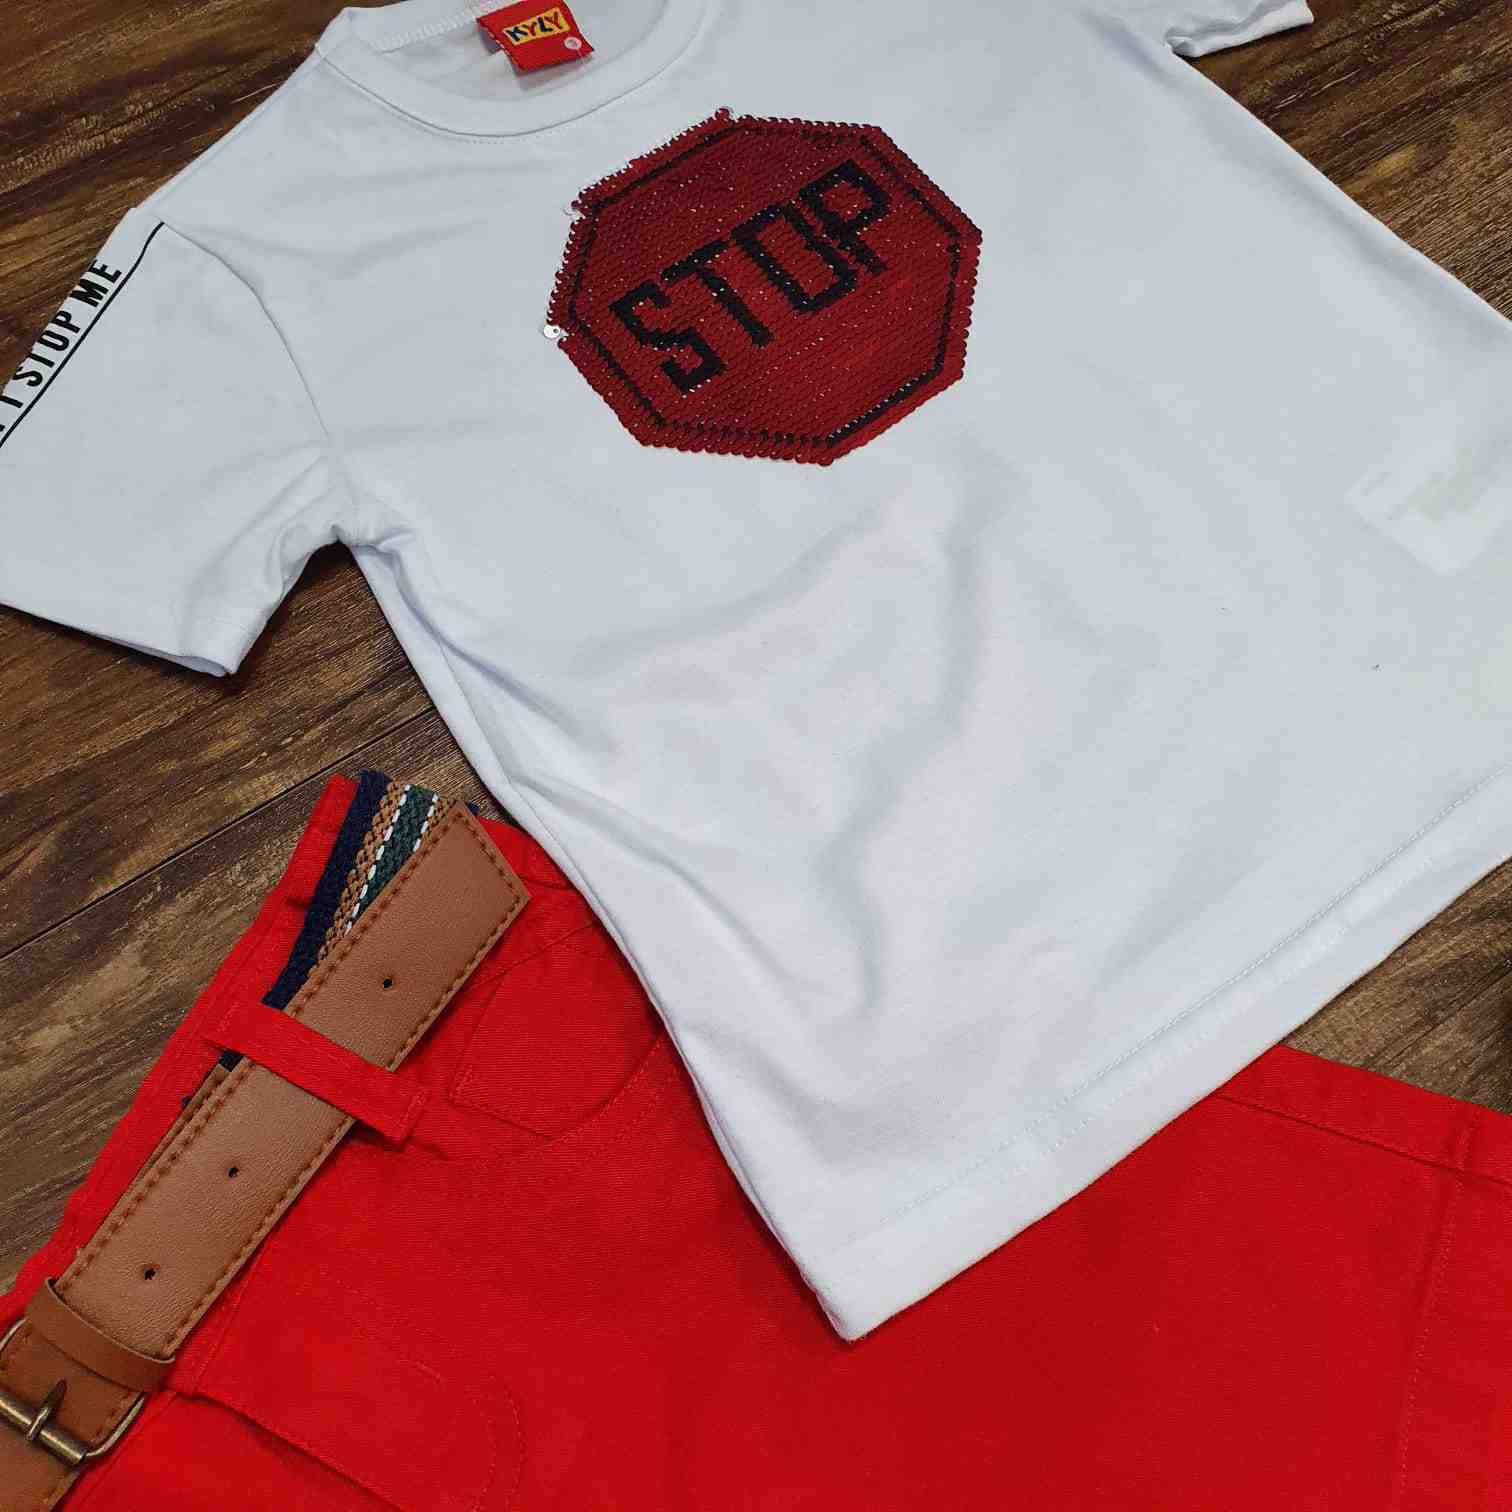 Conjunto Camiseta GO! / Stop Paetê Infantil